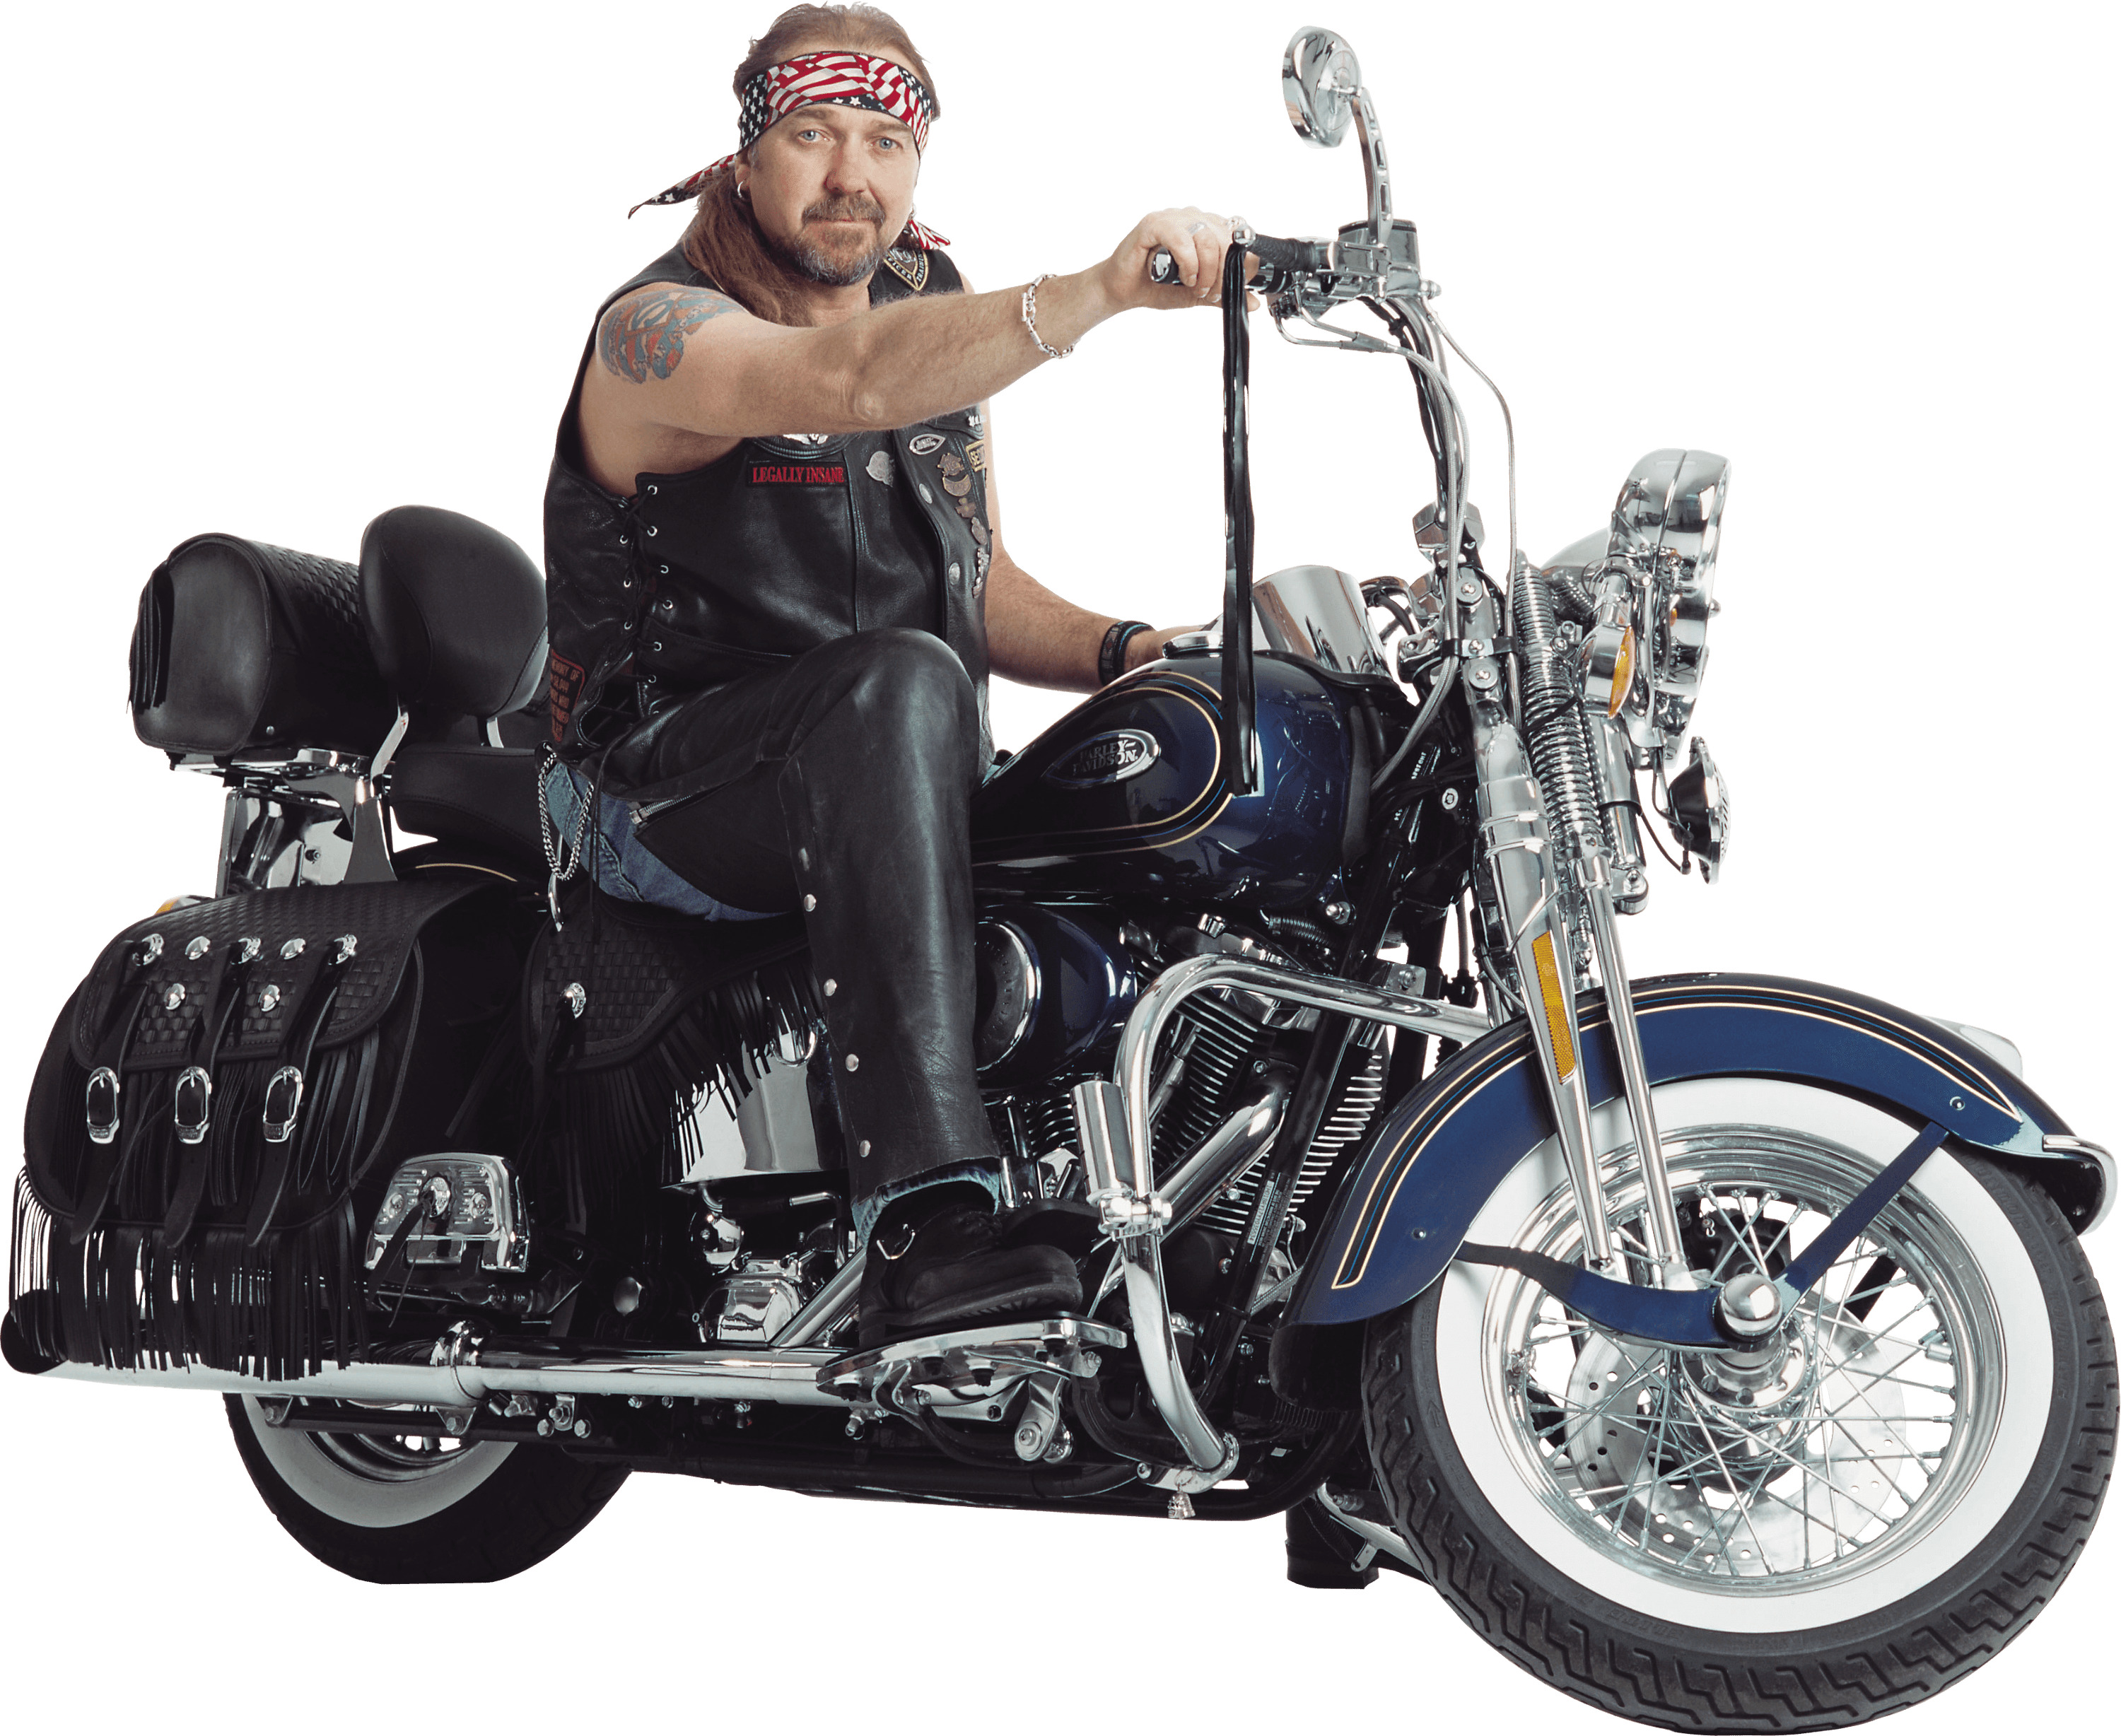 Motorbiker Harley Davidson Motorcycle icons